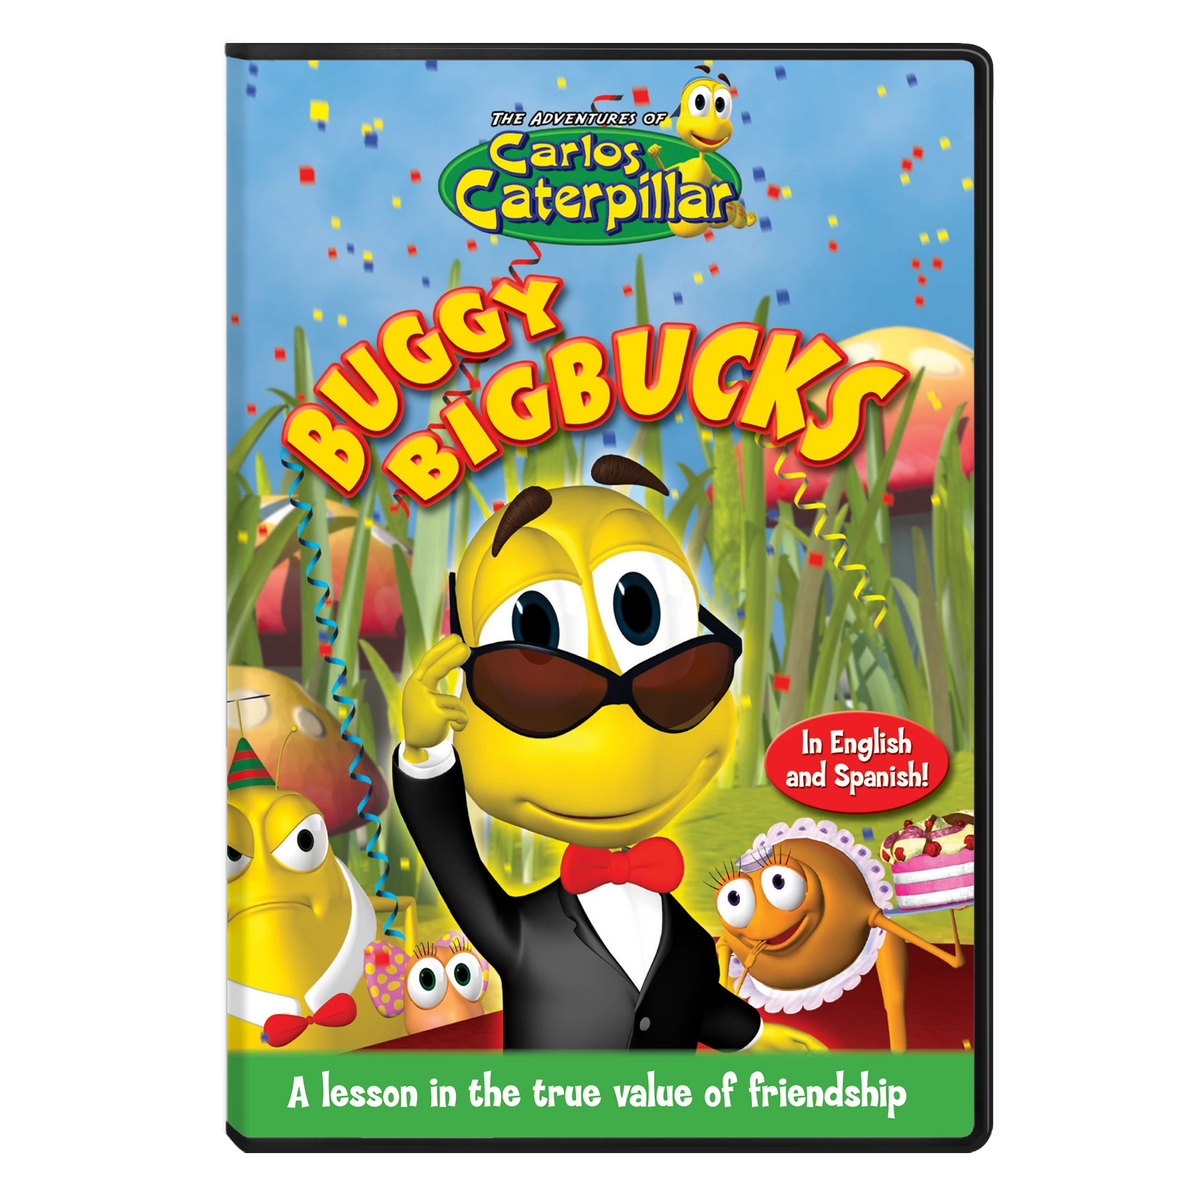 Carlos Caterpillar DVD - Ep.05: Buggy Bigbucks